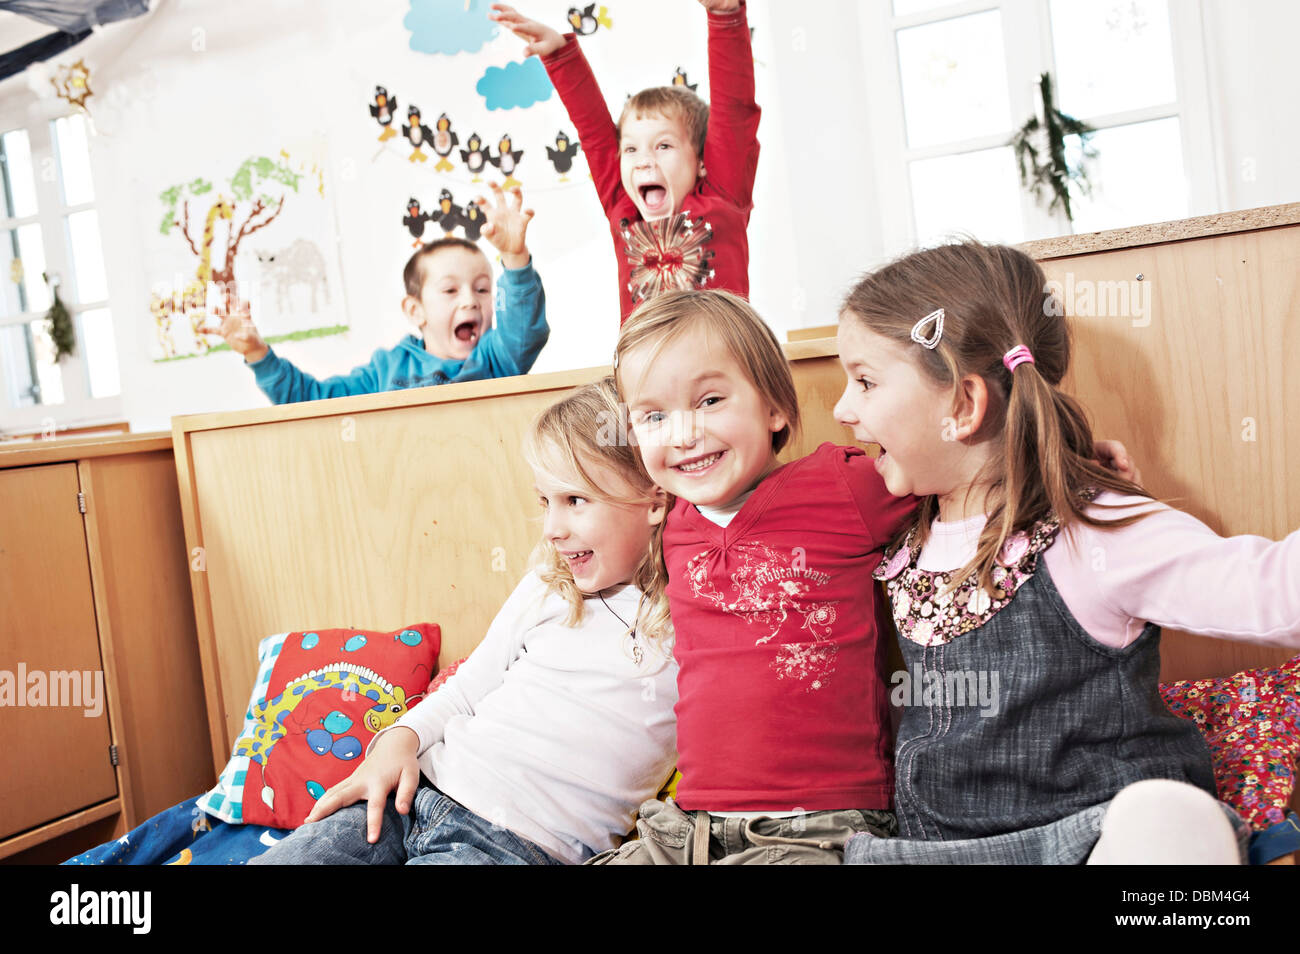 Les enfants en école maternelle, Kottgeisering, Bavaria, Germany, Europe Banque D'Images